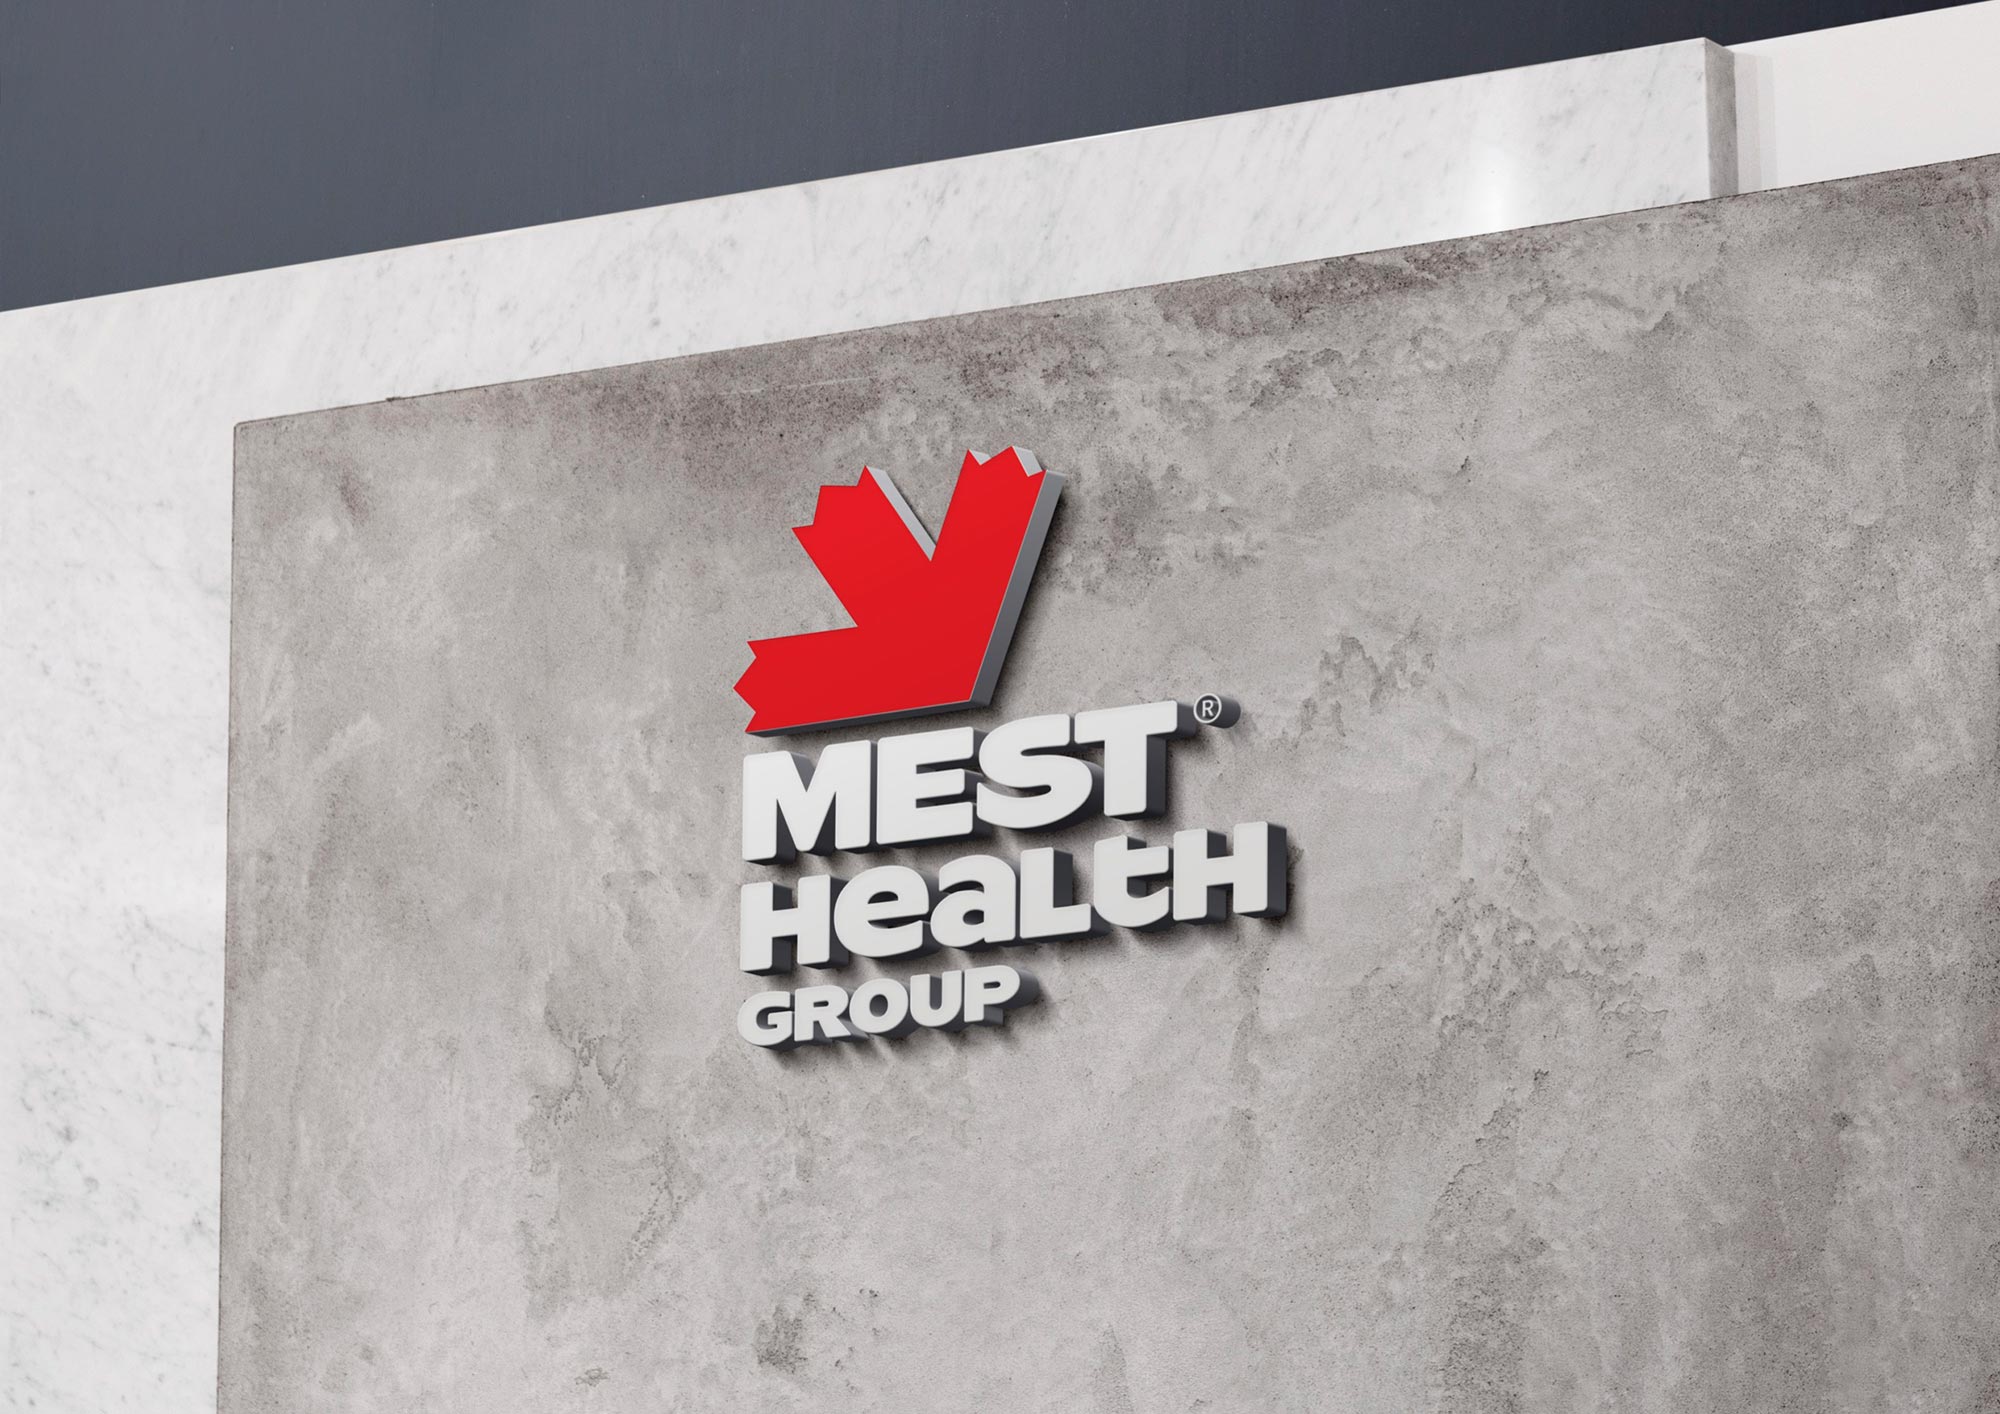 MEST Group Office Design - KONSEPTIZ Advertising Agency in Turkey